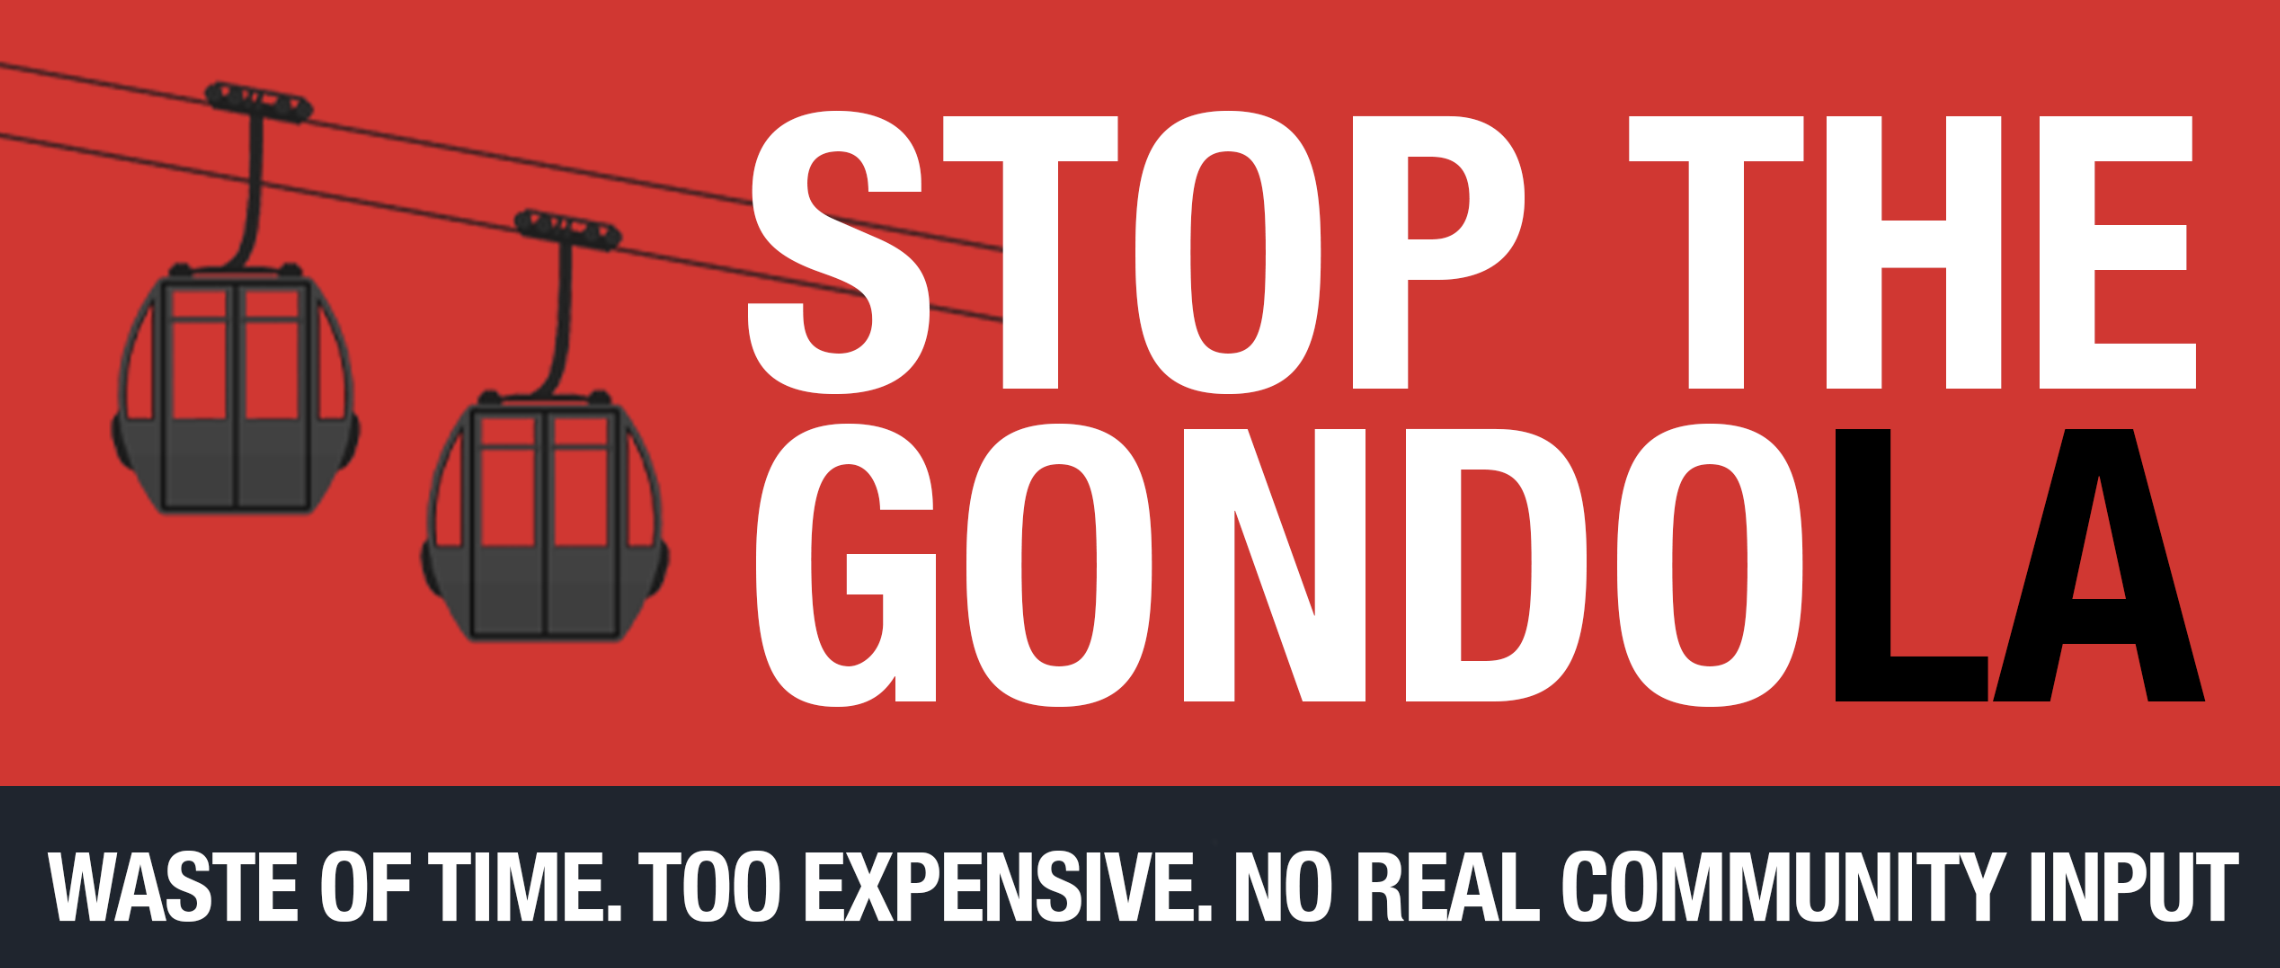 stop the gondola - more greenwashing